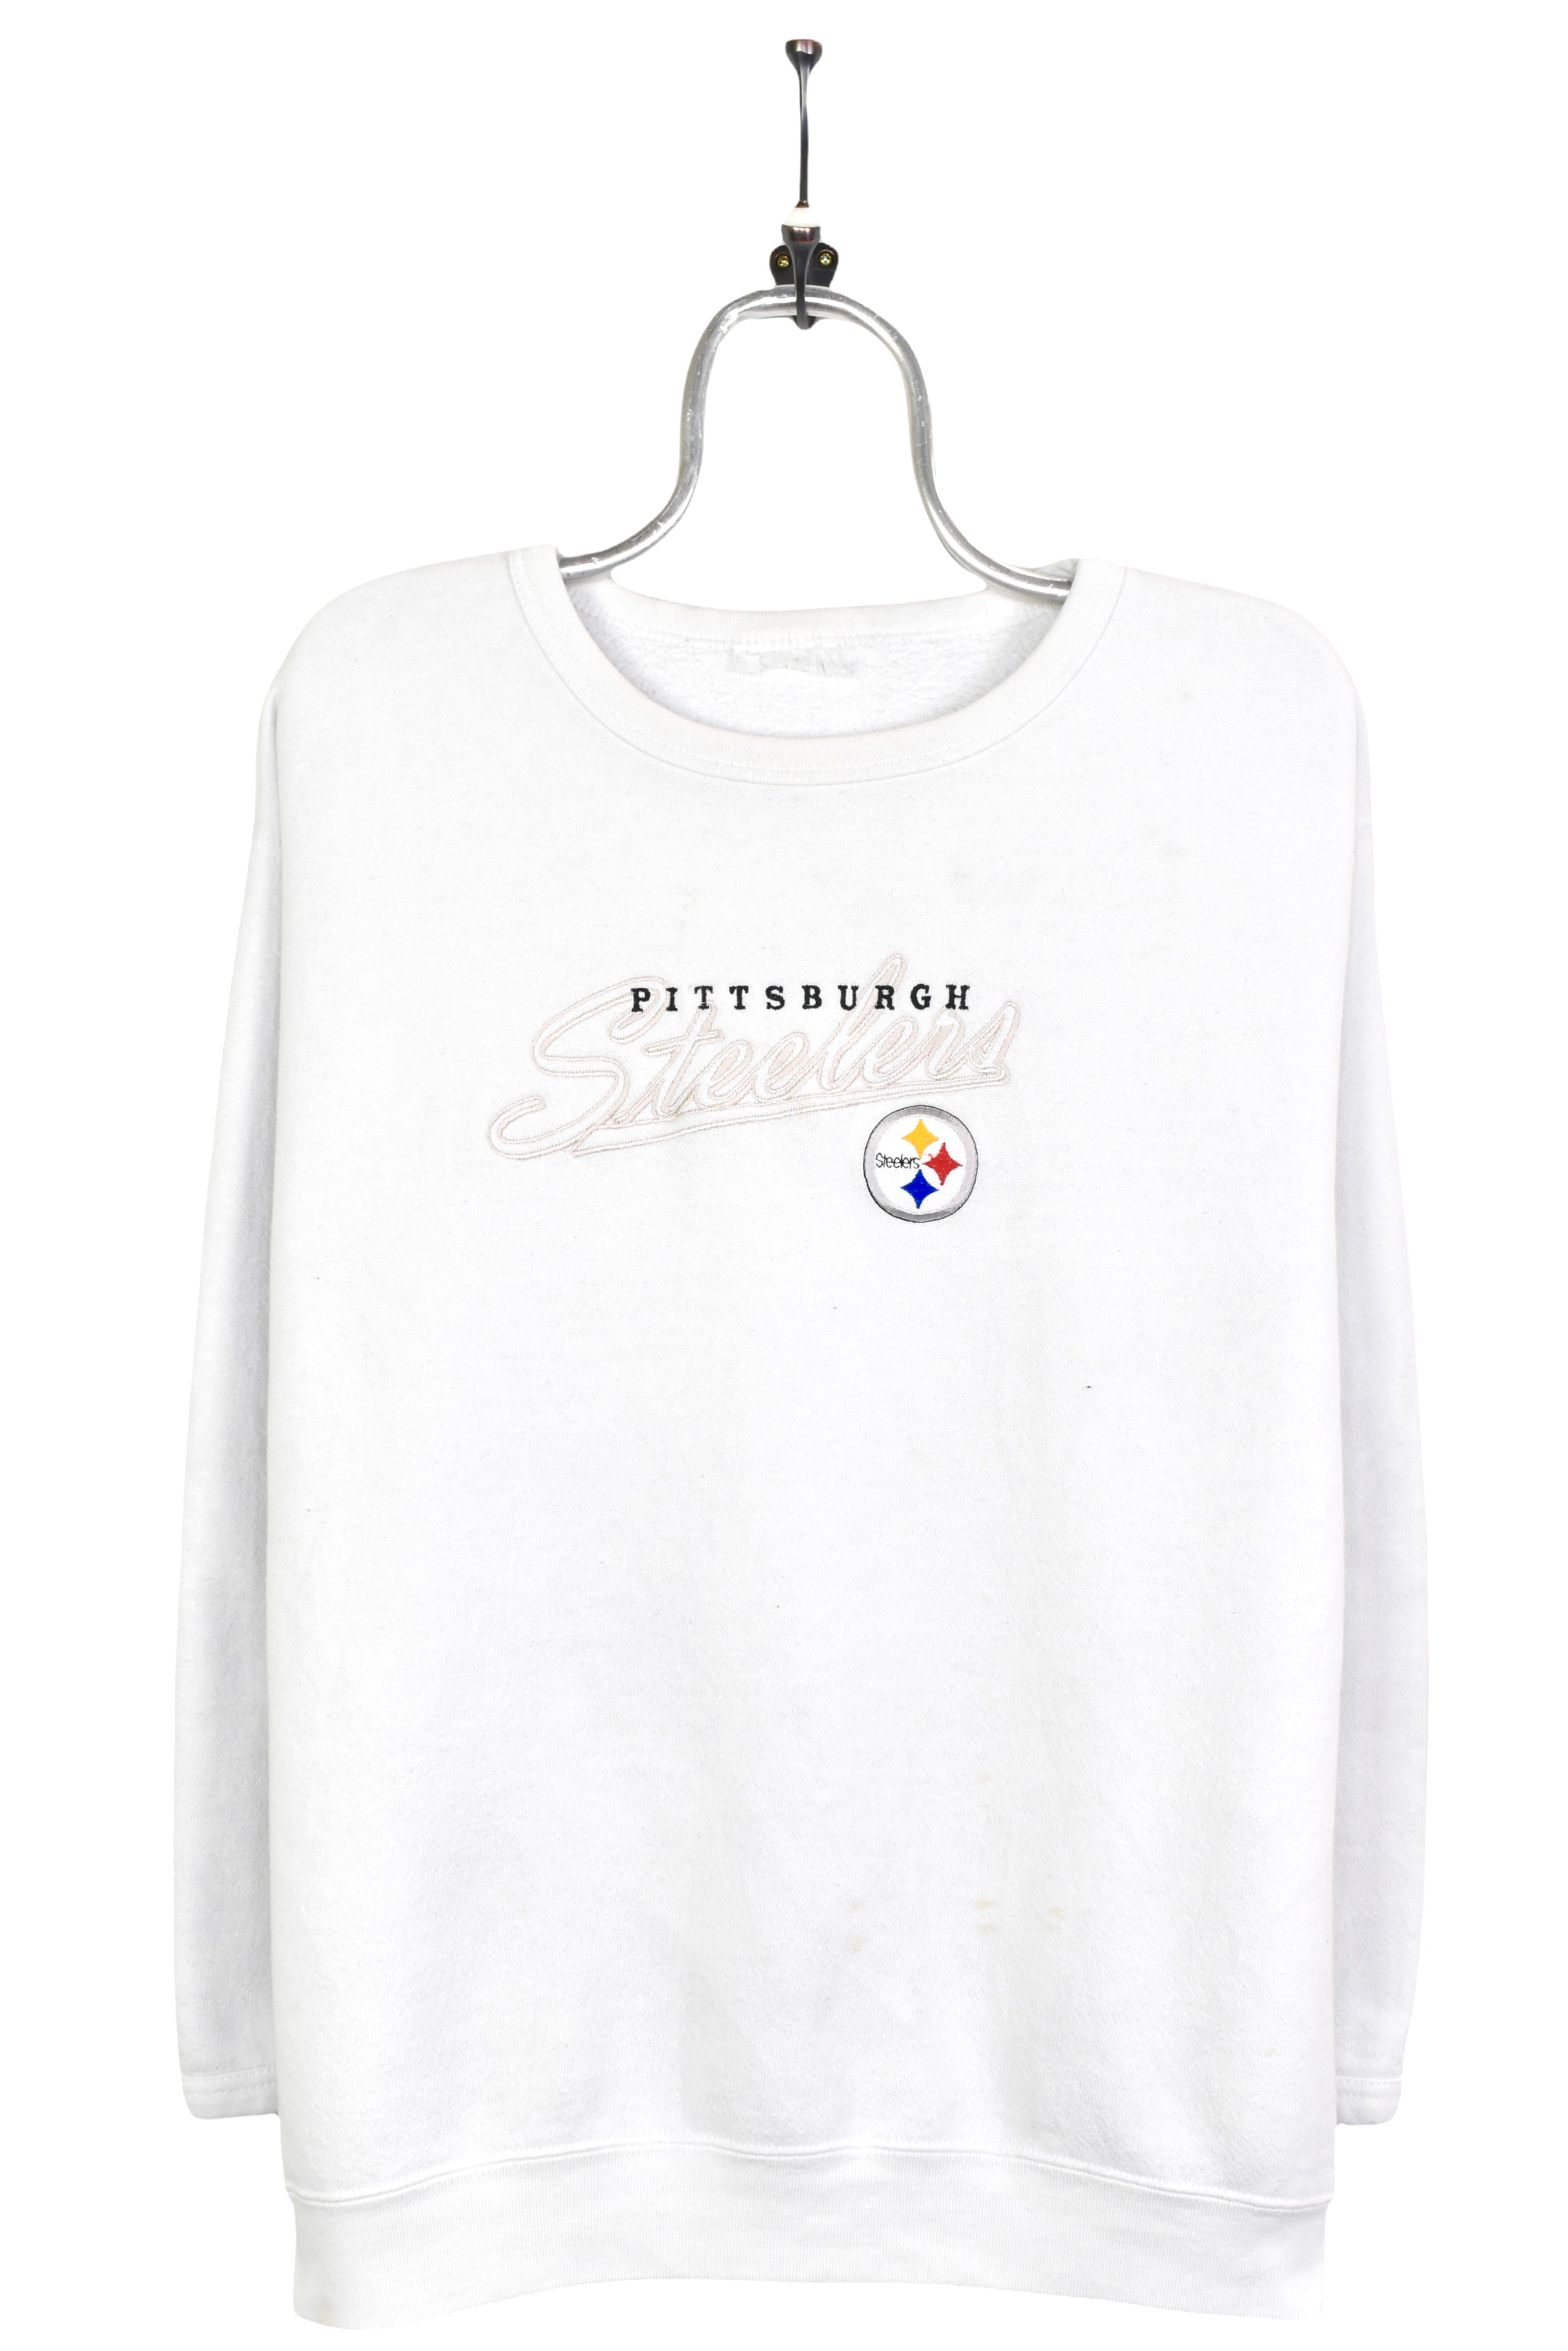 Vintage Pittsburgh Steelers sweatshirt, NFL white embroidered crewneck - AU Large PRO SPORT